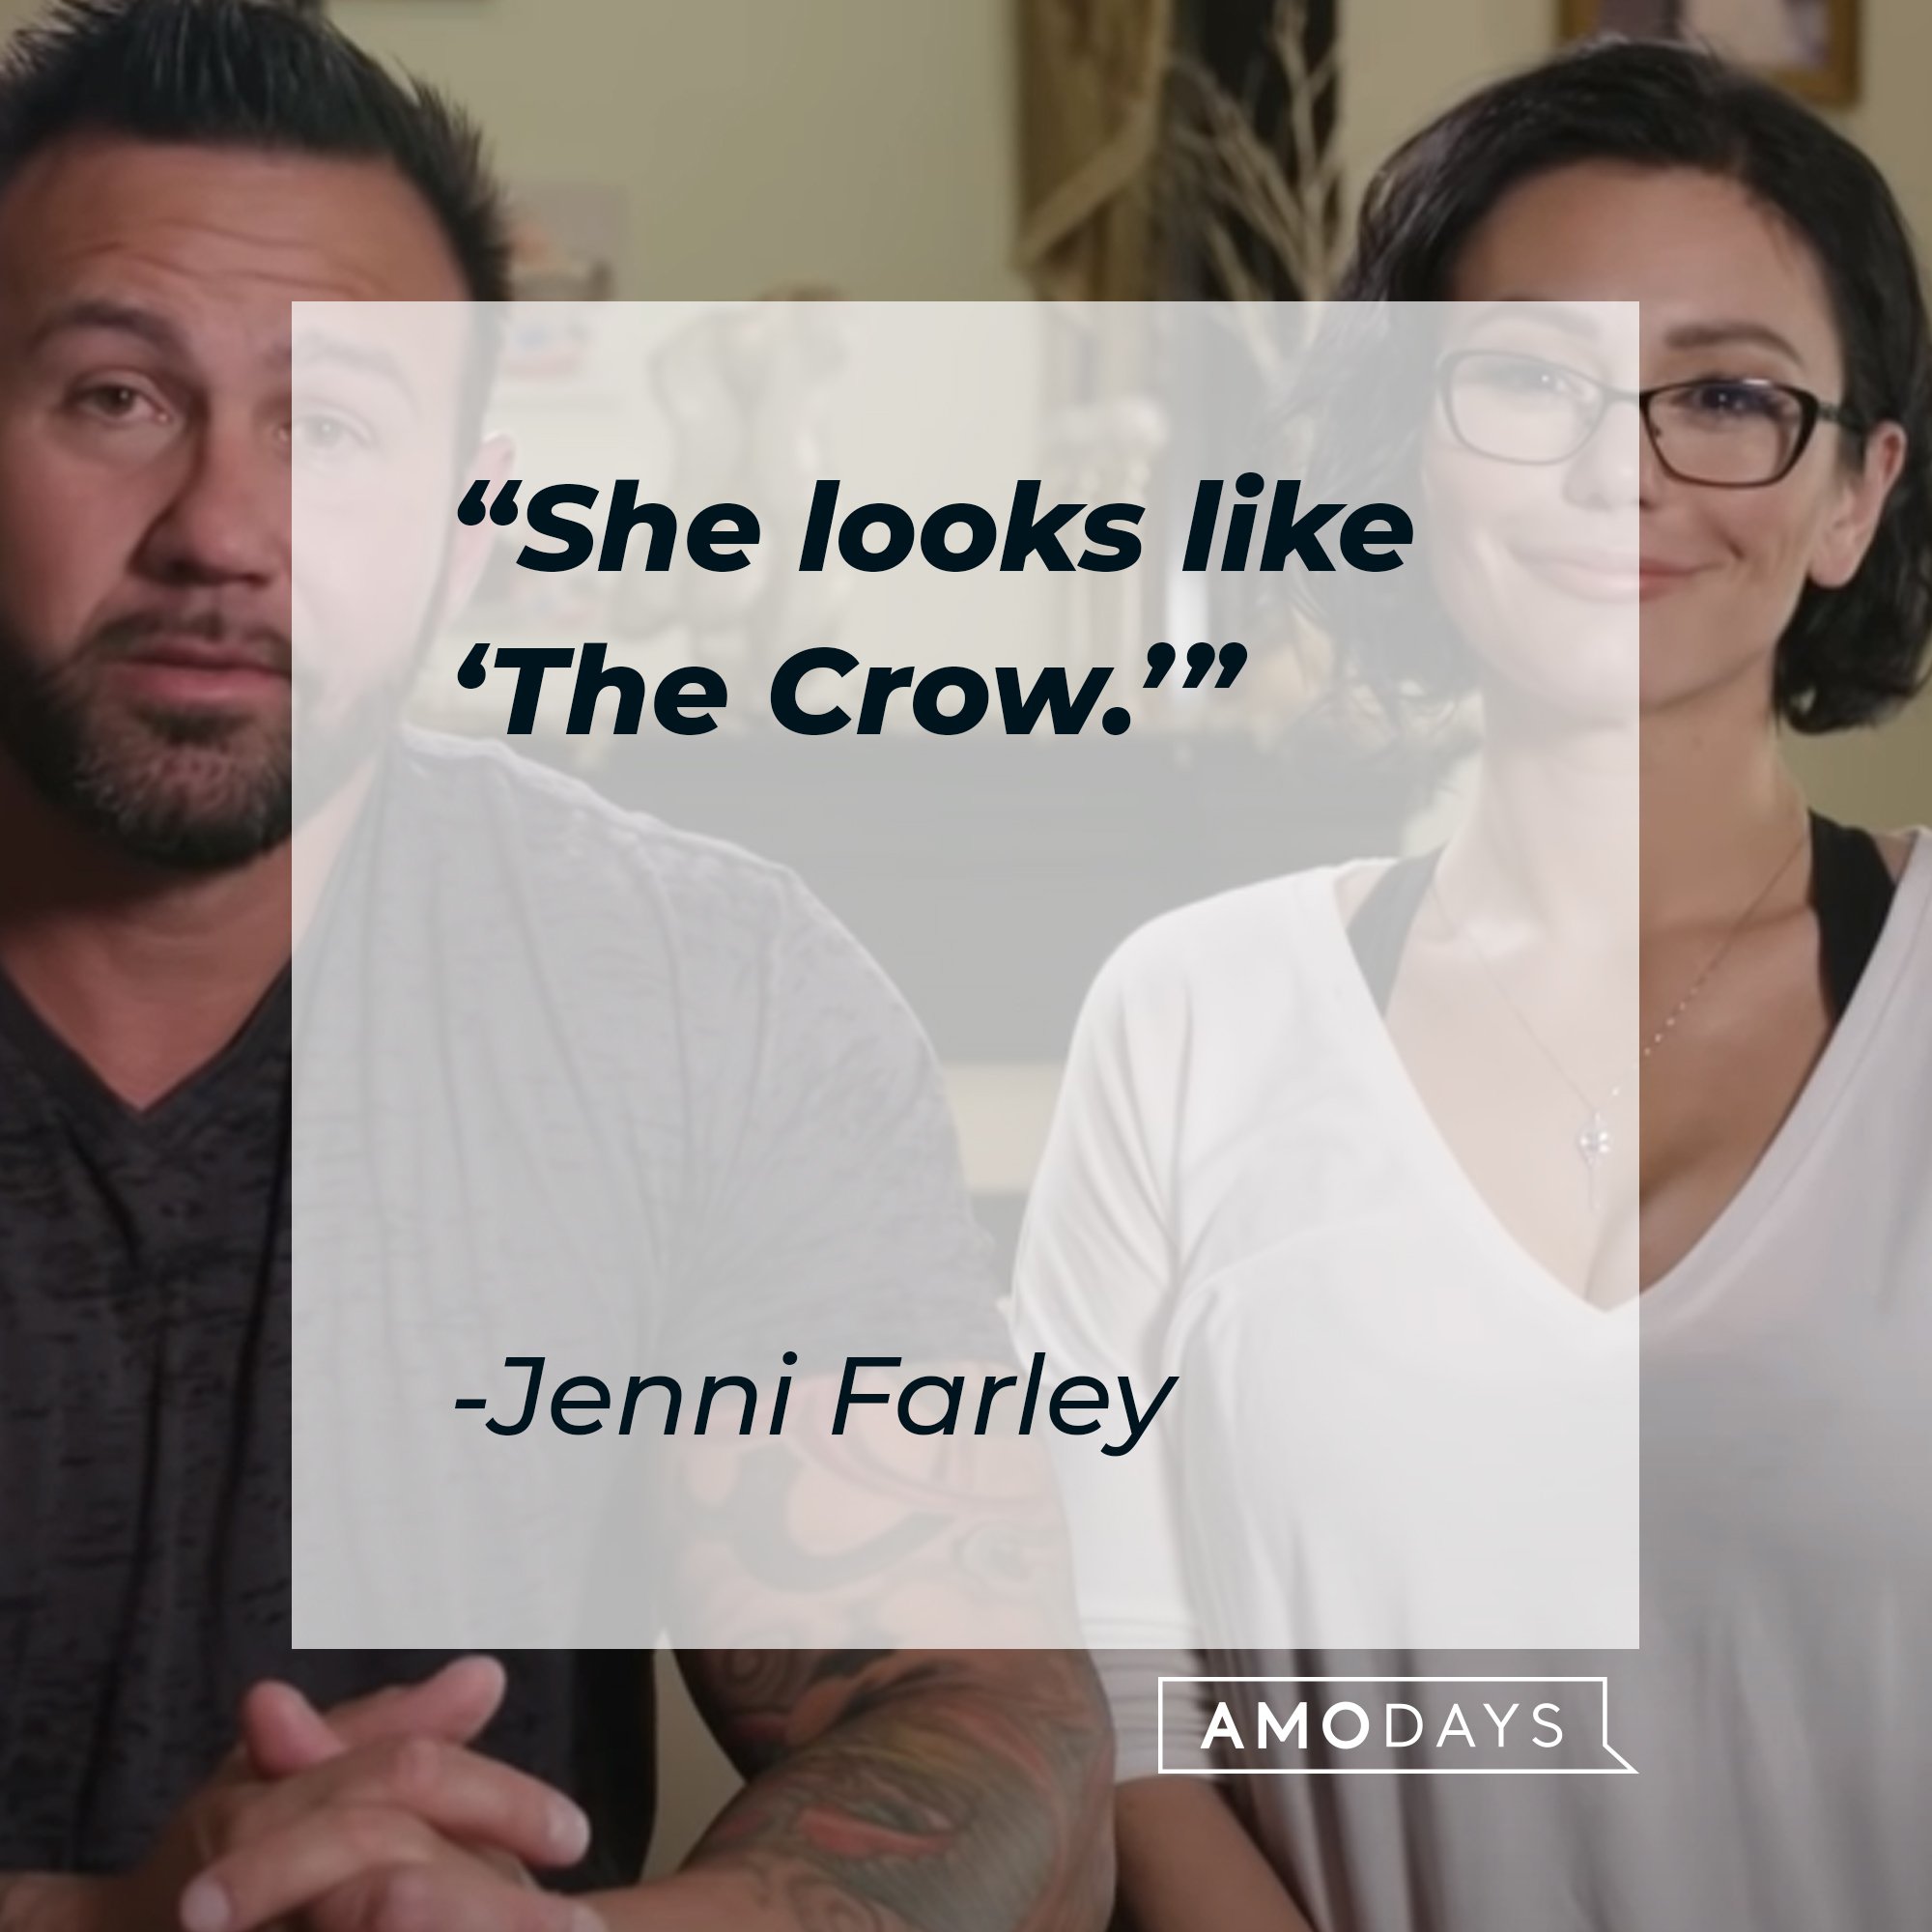 Jenni Farley's quote: "She looks like 'The Crow.'" | Image: AmoDays